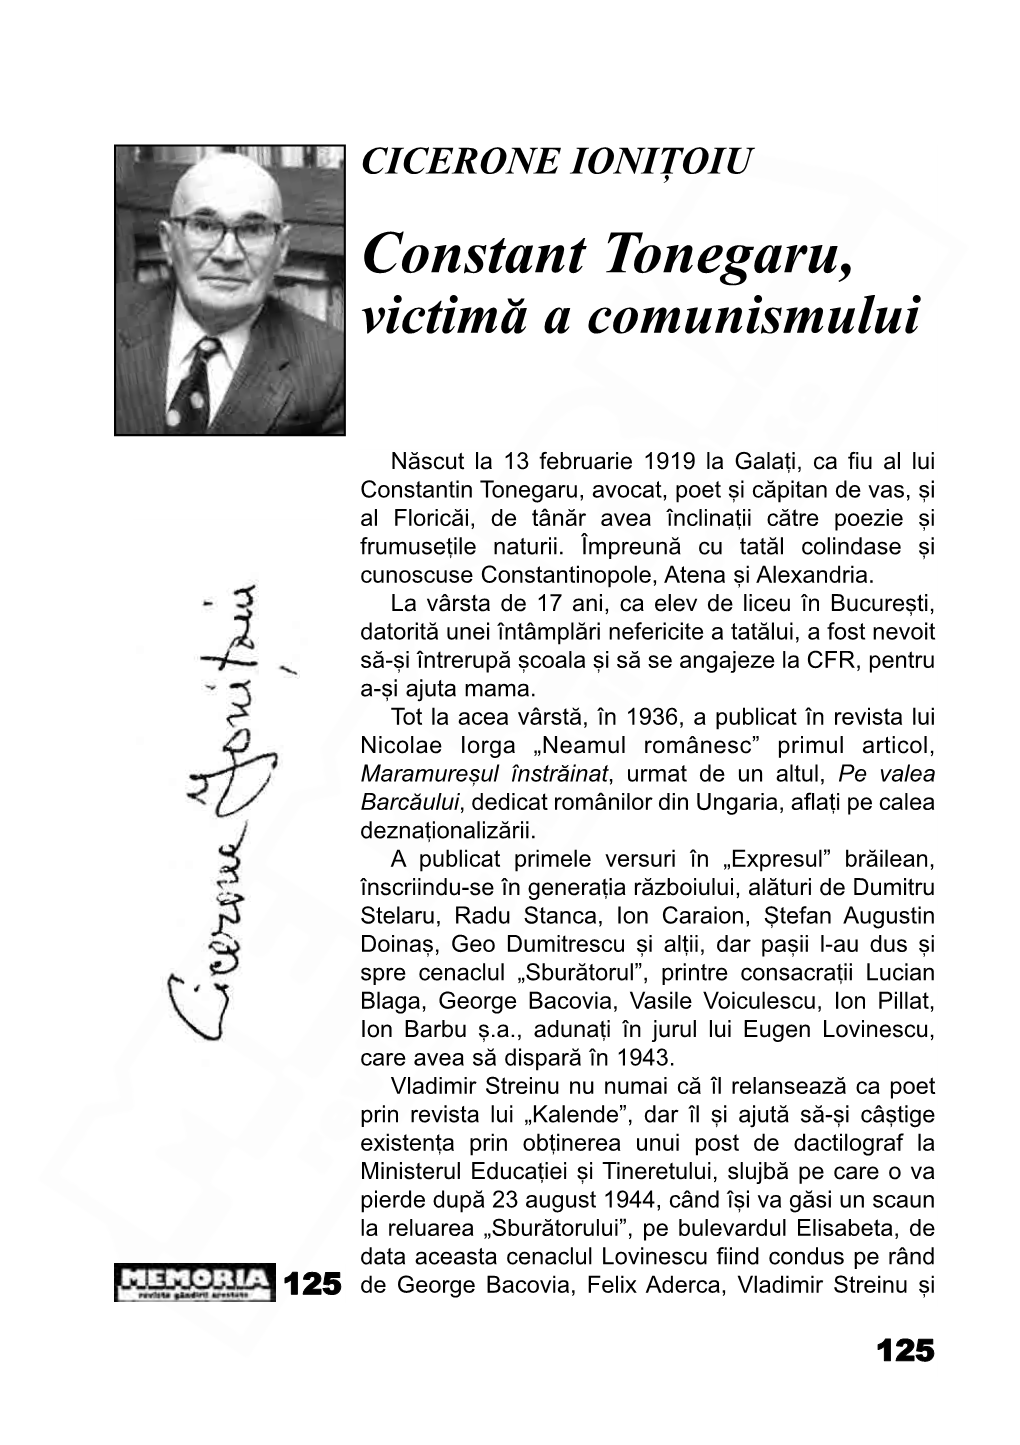 Constant Tonegaru, Victimã a Comunismului